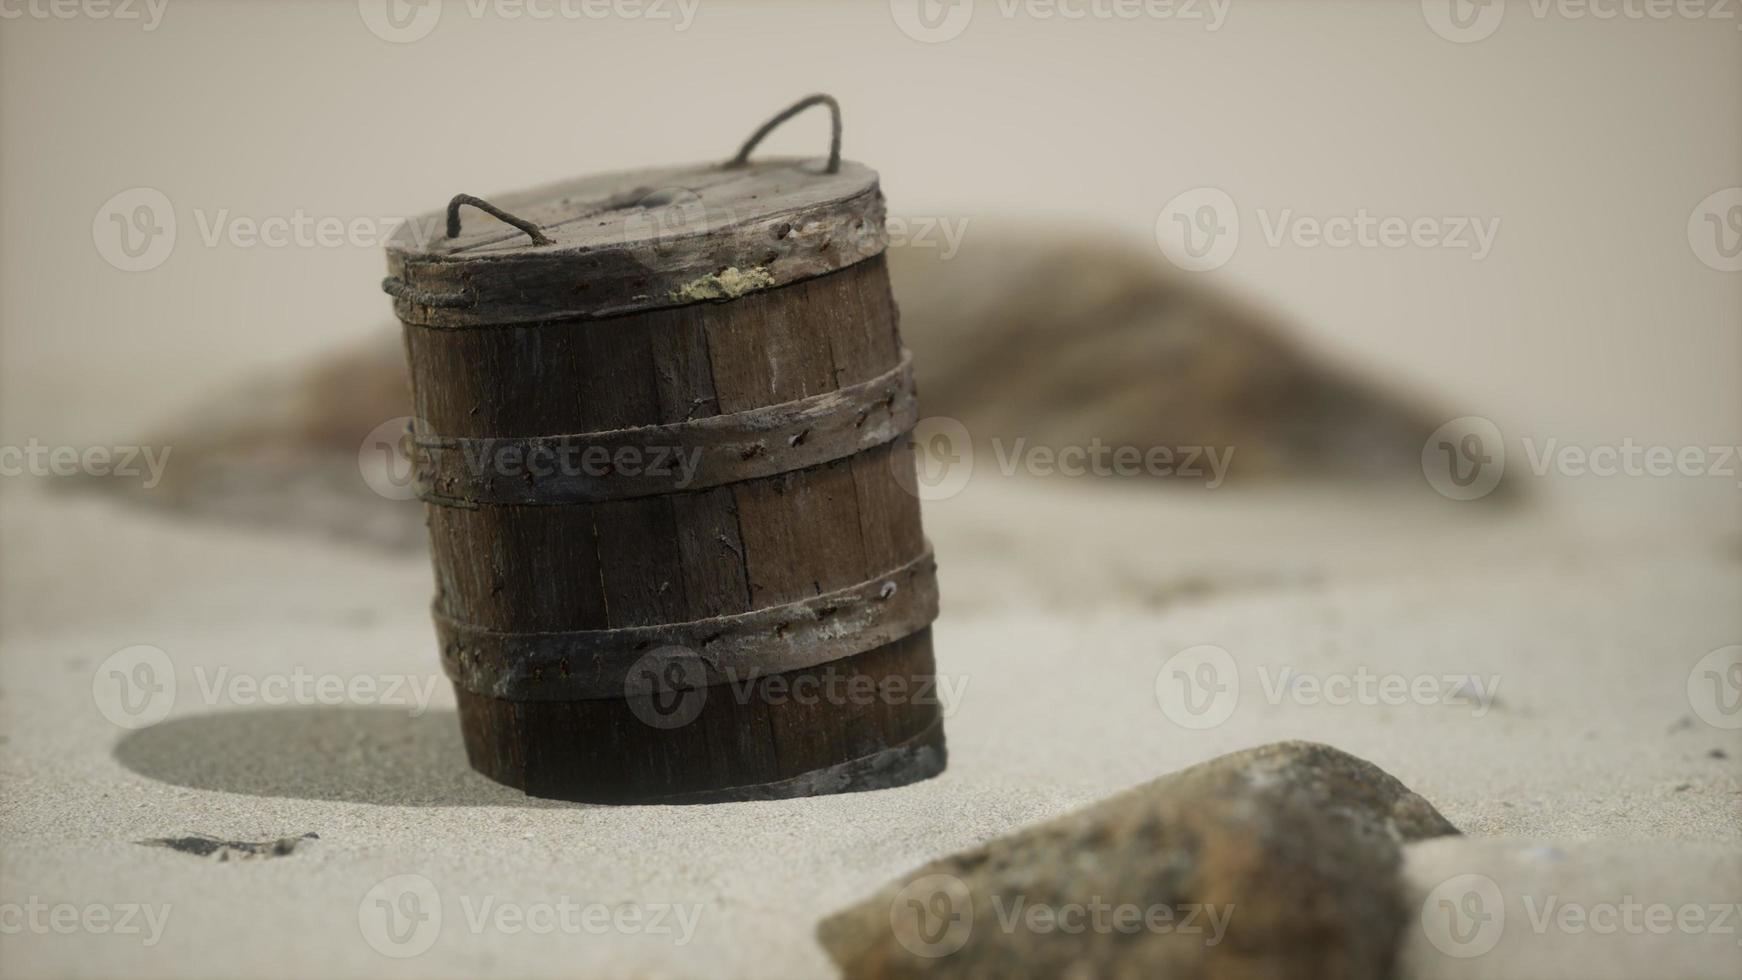 alter Holzkorb auf dem Sand am Strand foto